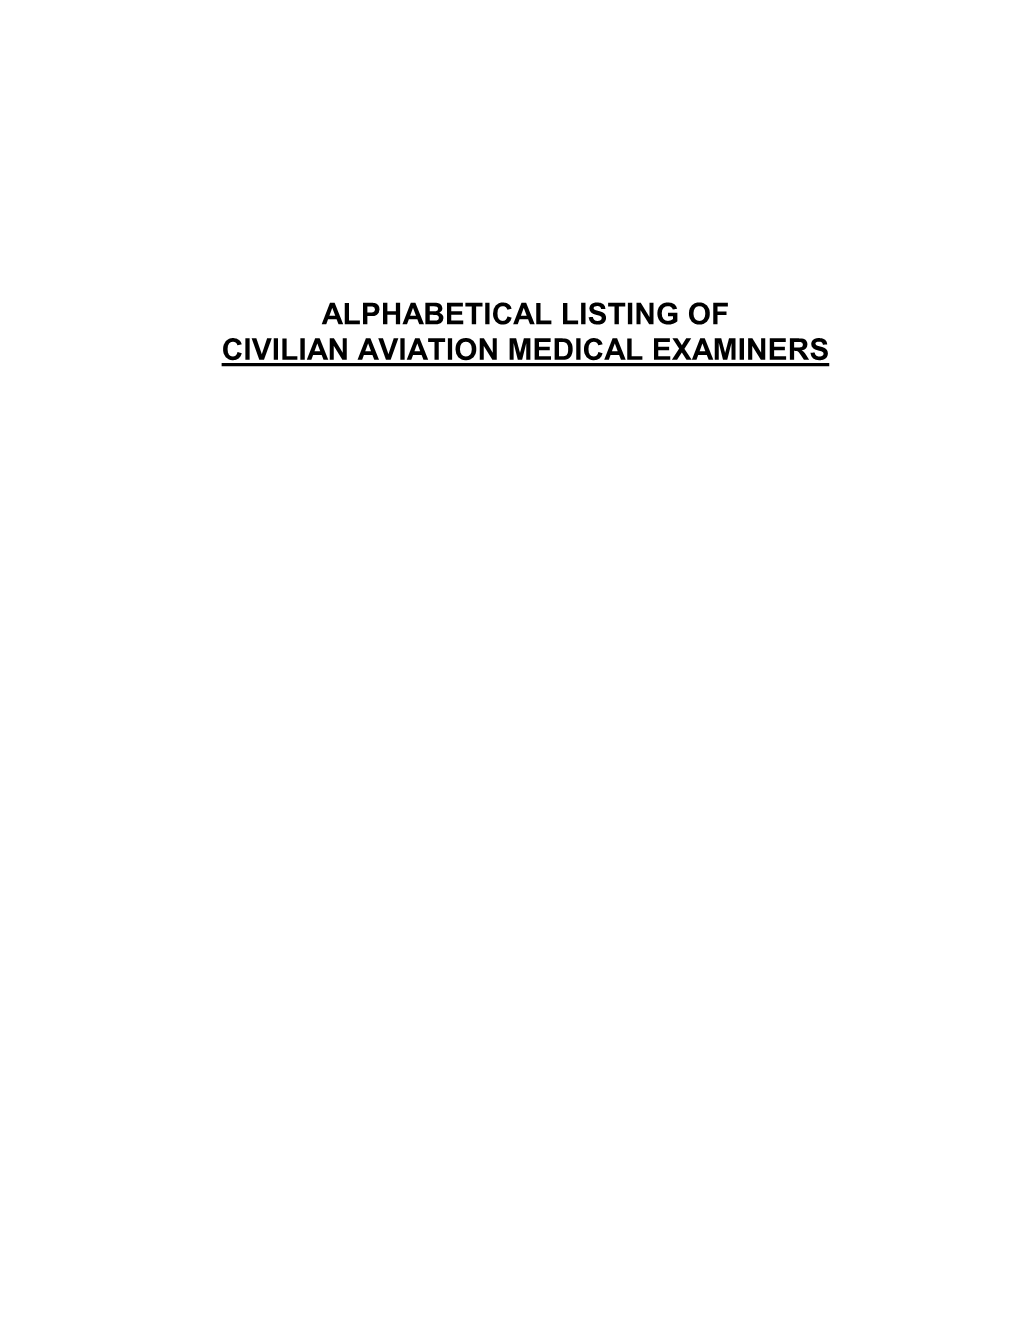 Alphabetical Listing of Civilian Aviation Medical Examiners a Aarnell, Goran J, Md Healthcare Center, Stockholmsvagen 2 Orkelljunga, Sweden S2862-1 4643552065